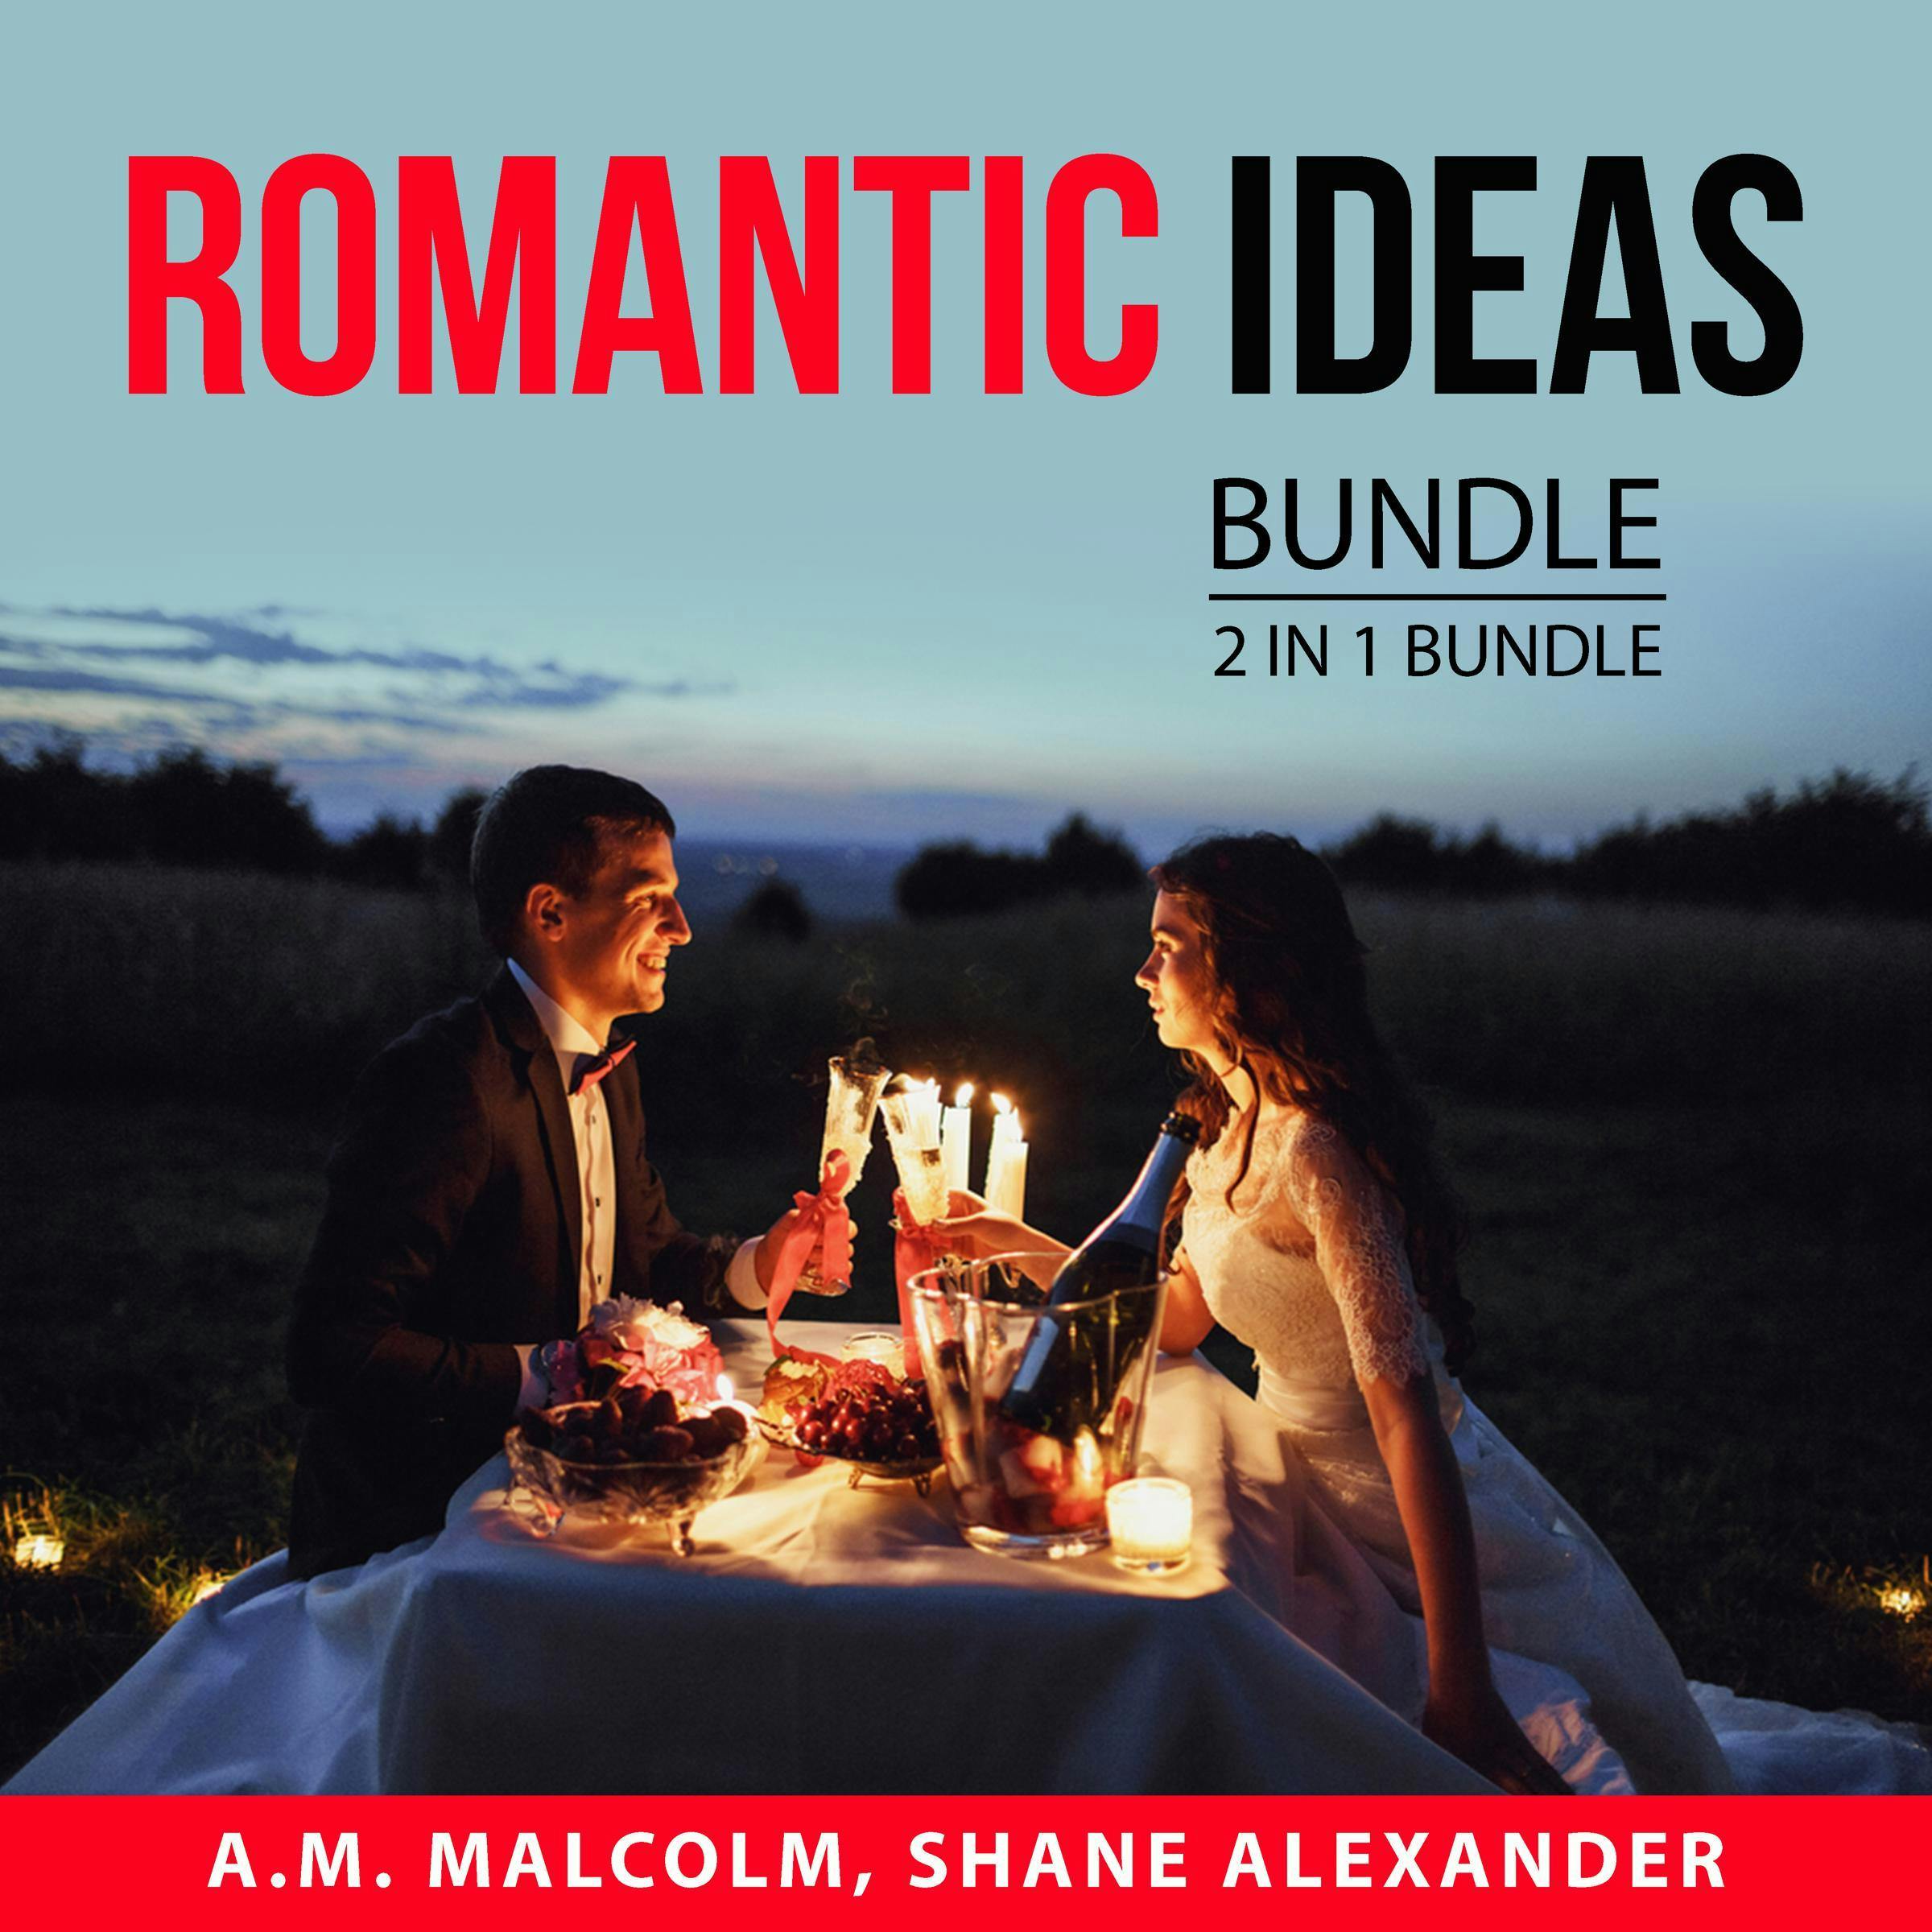 Romantic Ideas Bundle, 2 in 1 Bundle: Fall in Love Again and Romantic - A.M. Malcolm, Shane Alexander